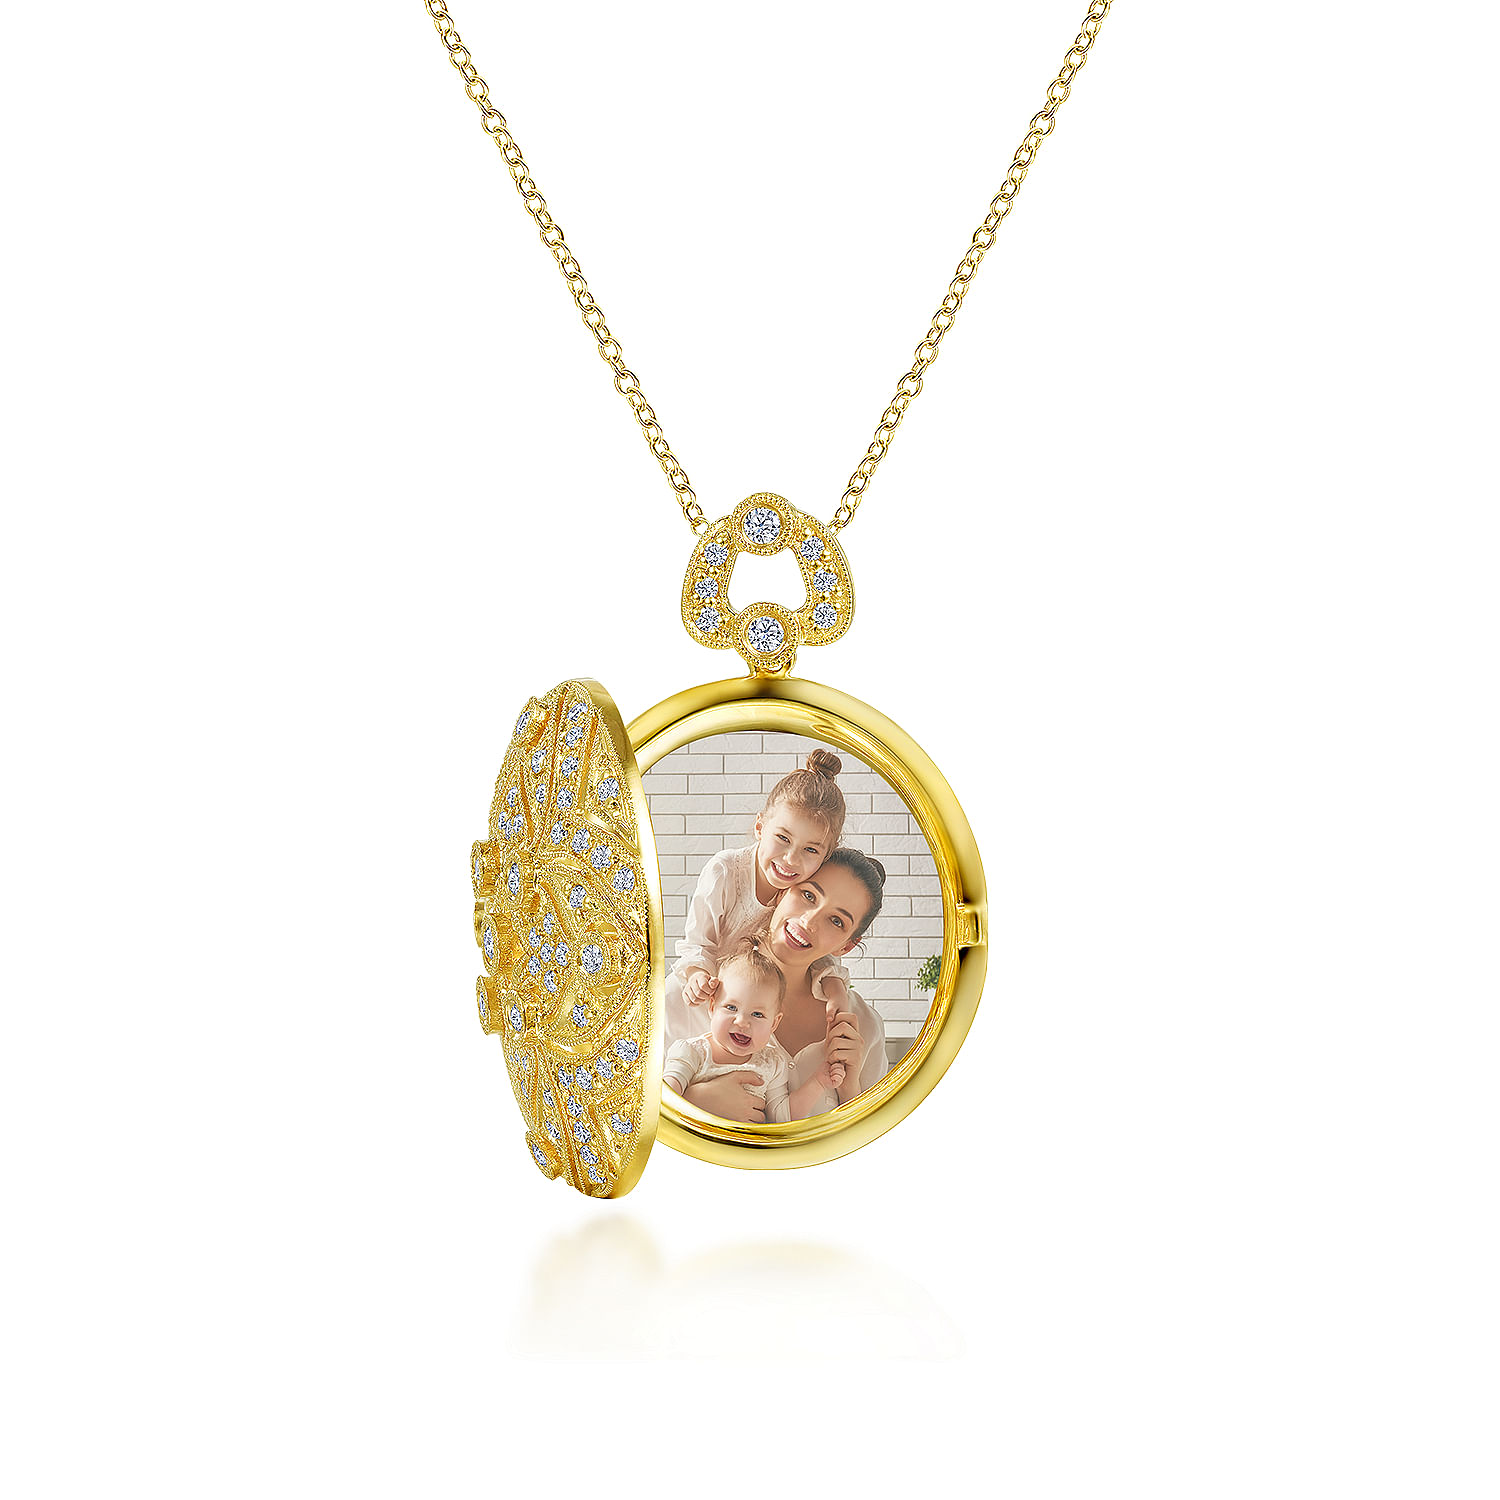 24 inch Vintage Inspired 14K Yellow Gold Round Filigree Diamond Locket Necklace